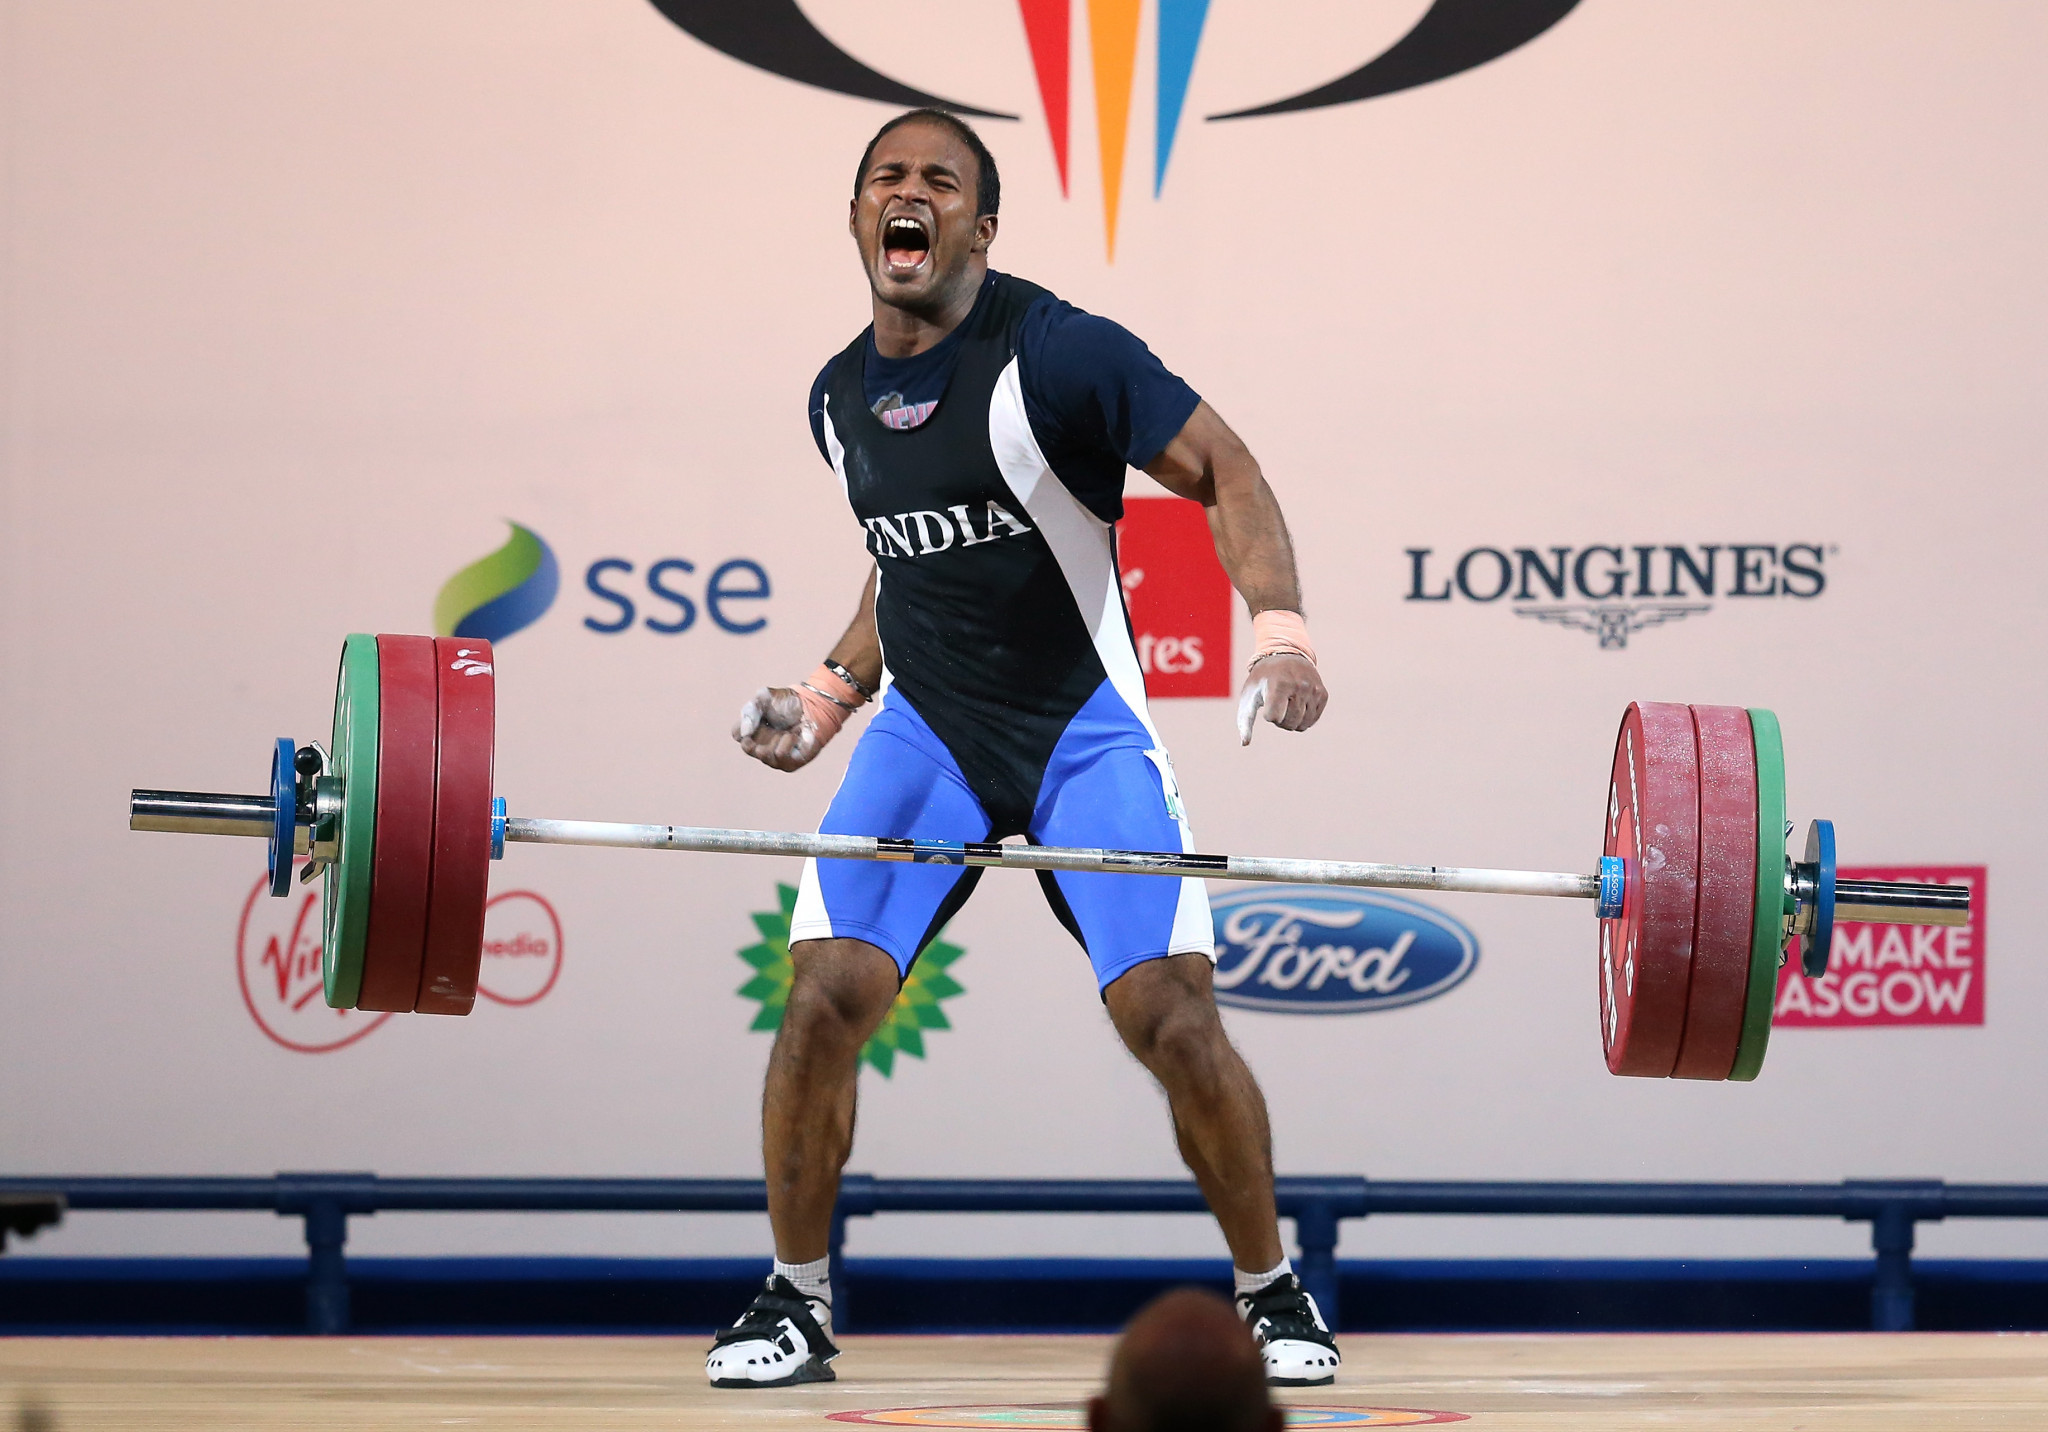 Sathish Sivalingam won gold at Glasgow 2014 ©Getty Images